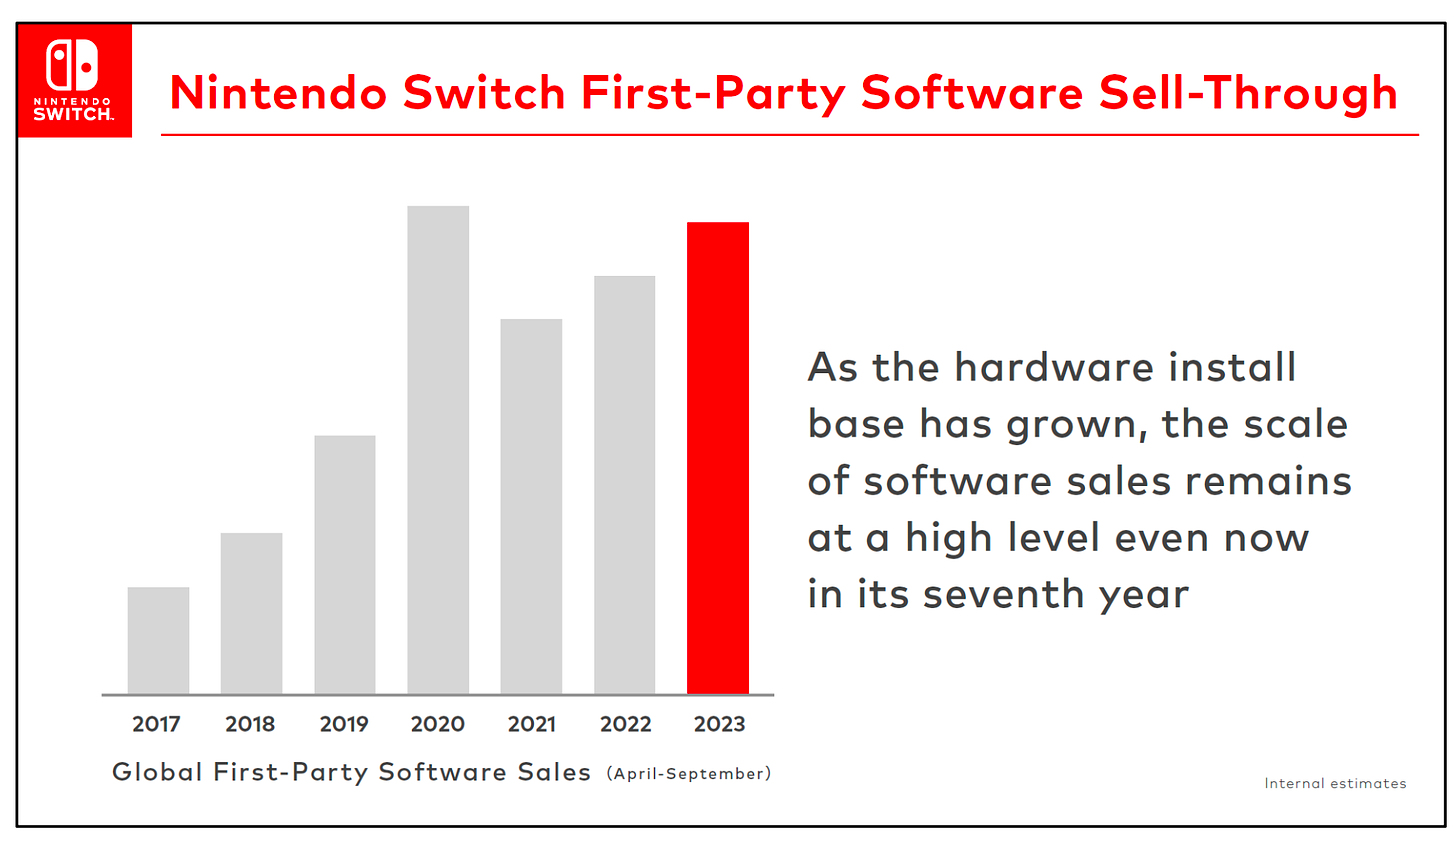 Nintendo switch years performance